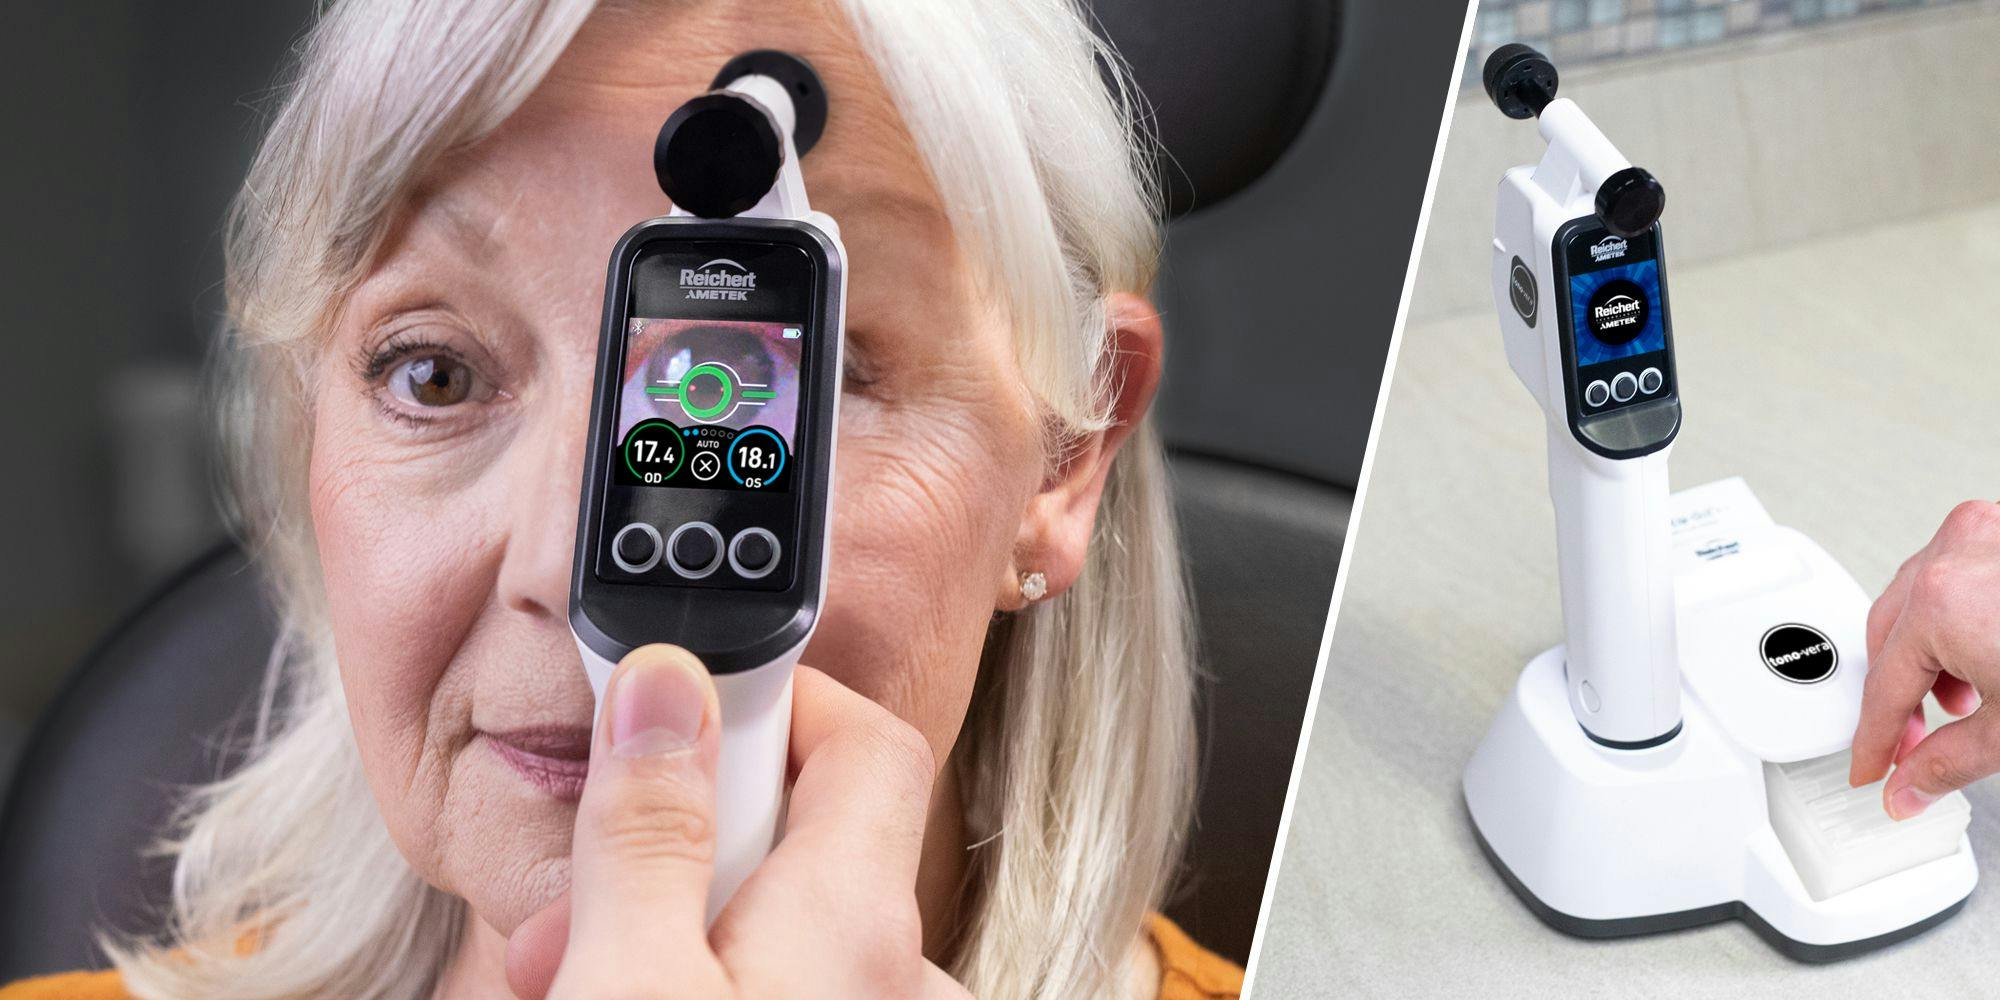 Physician using tonometer on patient's eye Image credit: Reichert Technologies